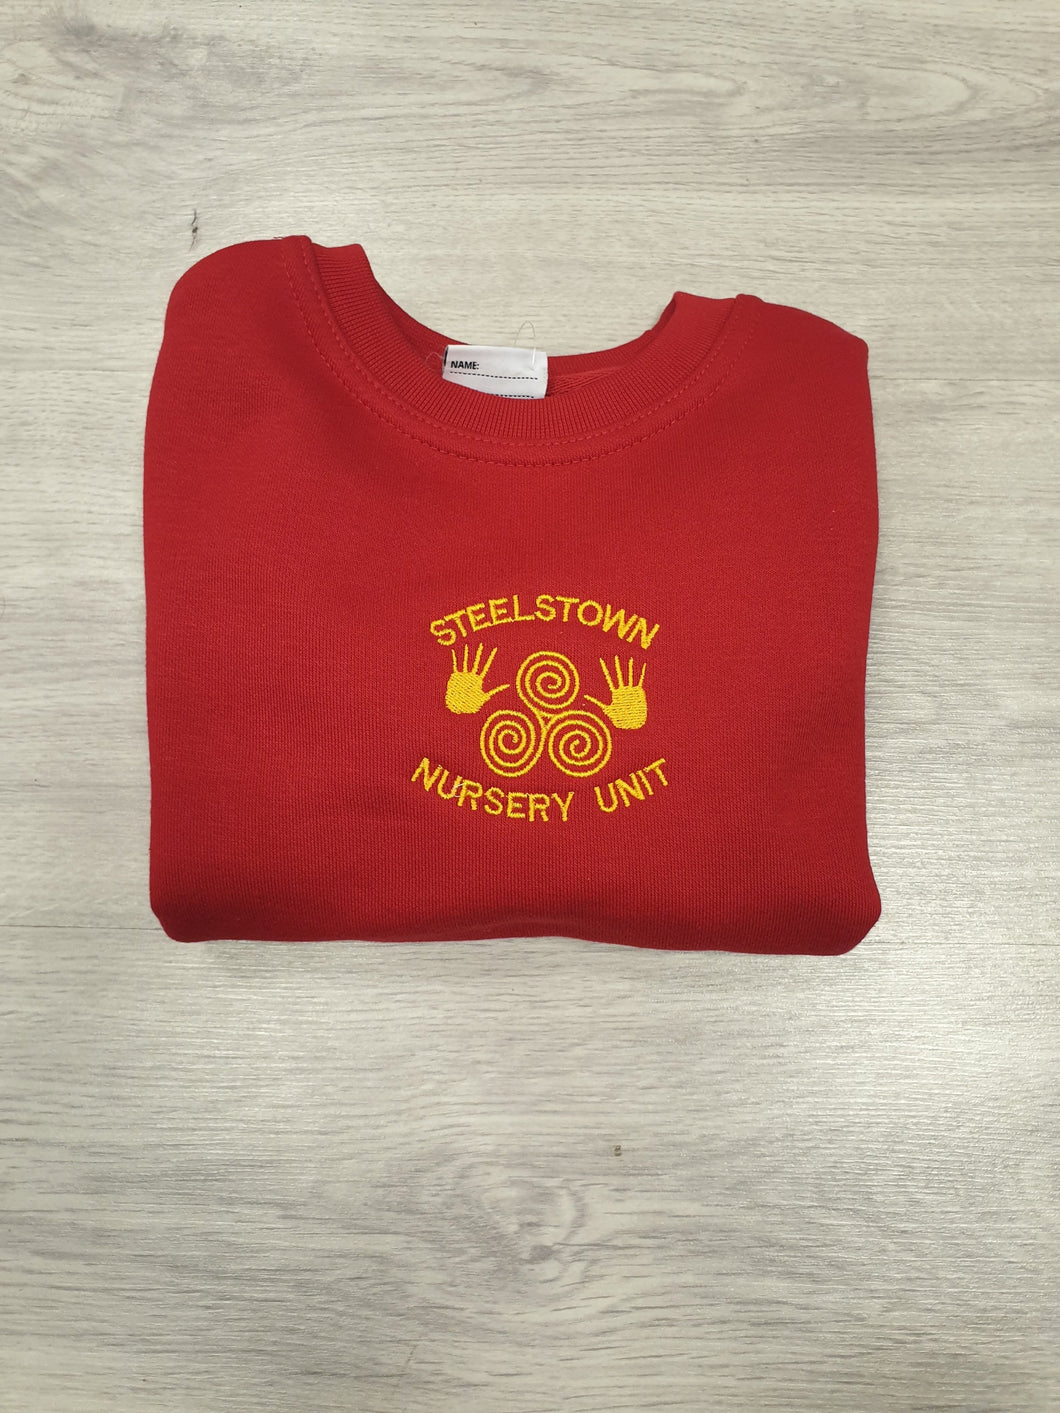 2 x Steelstown nursery red sweatshirt (SAVE 10%)